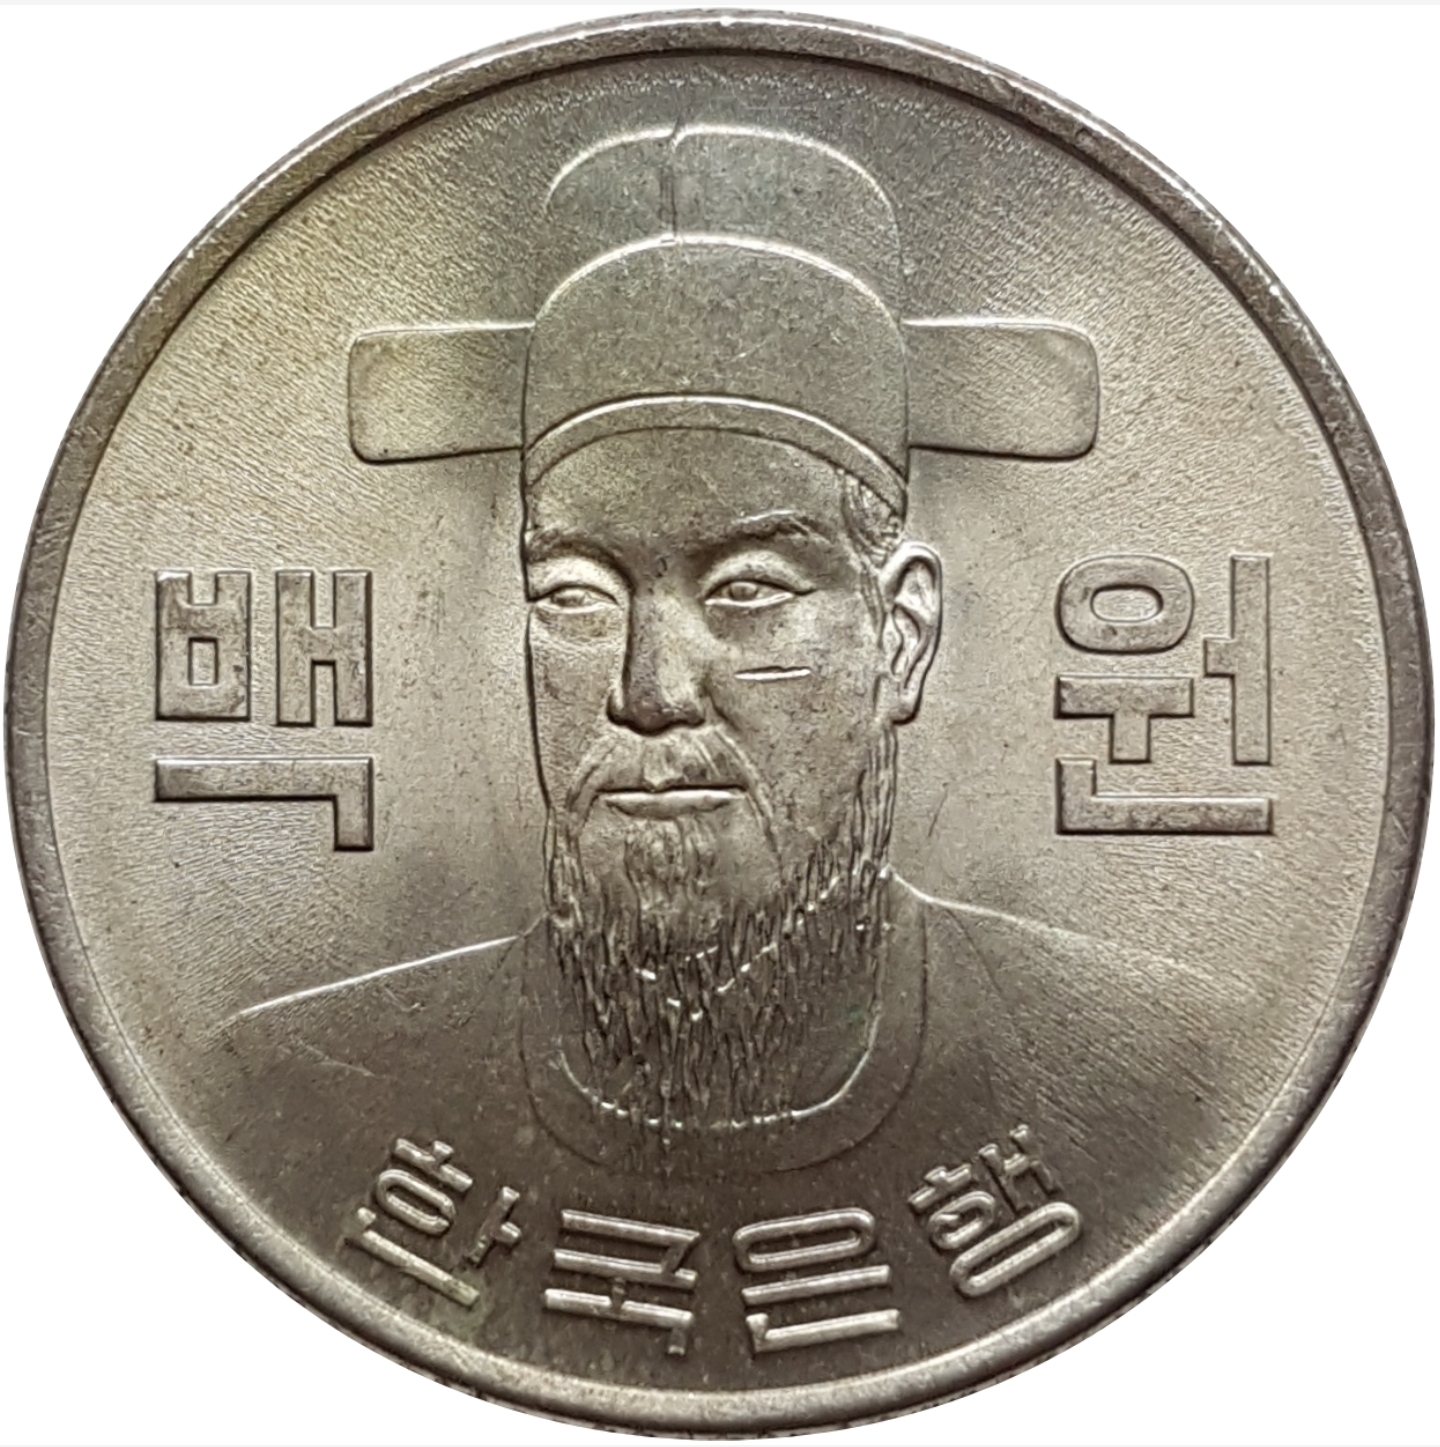 South Korean won (–) - Wikipedia